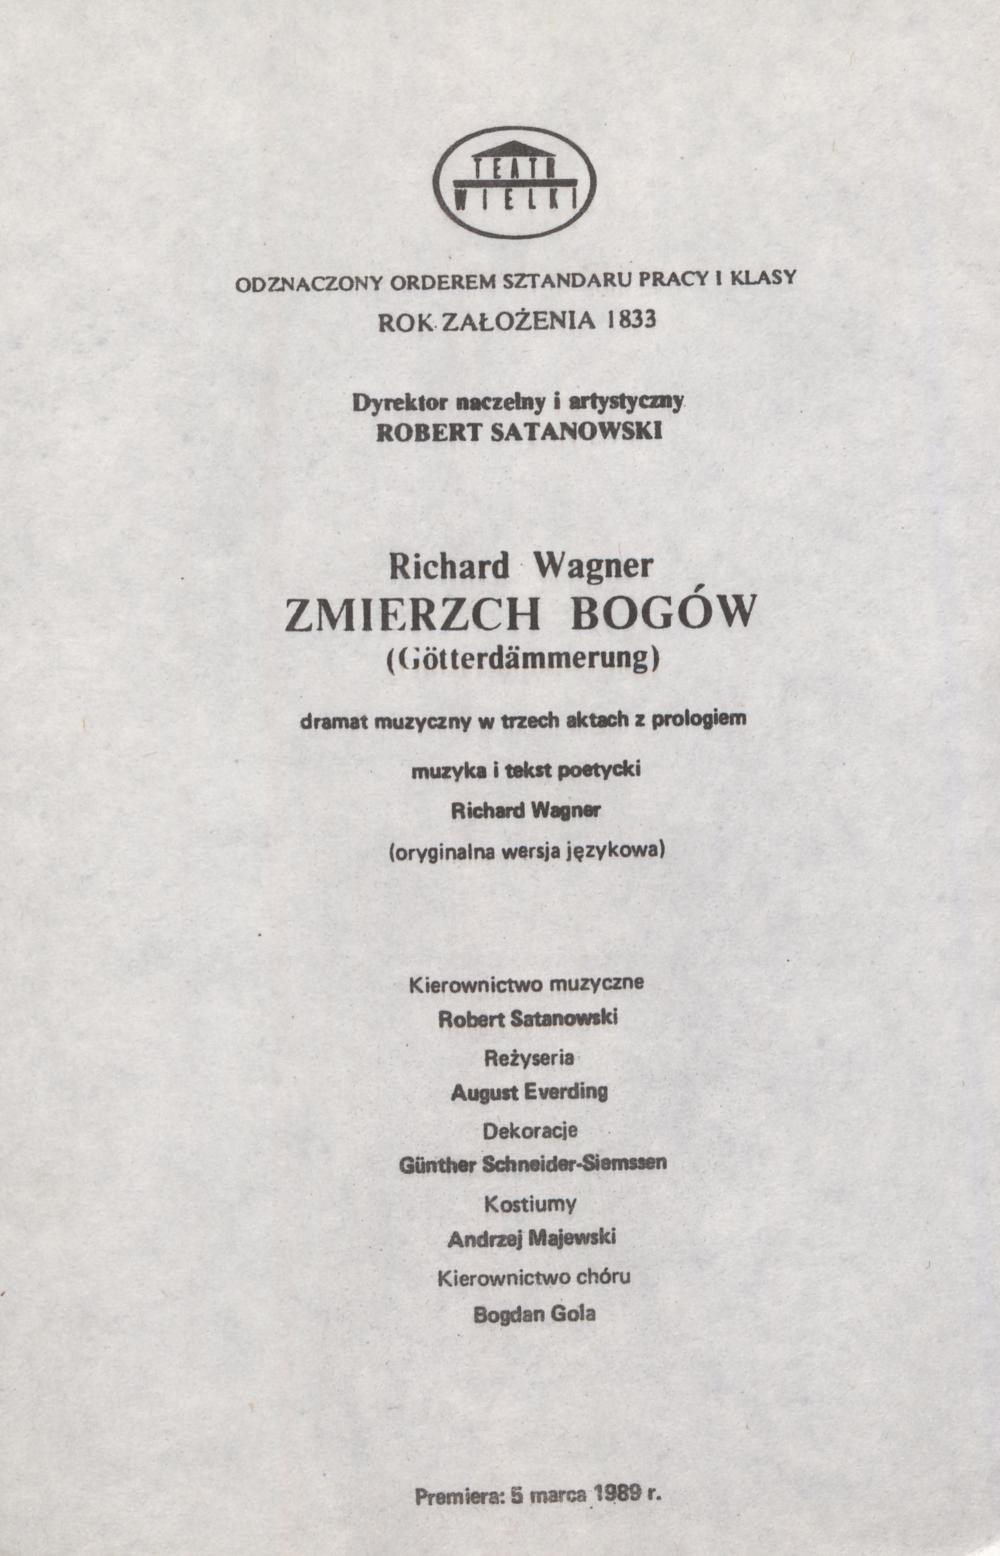 Wkładka obsadowa „Zmierzch bogów” (Götterdämmerung) Richard Wagner 19-03-1989